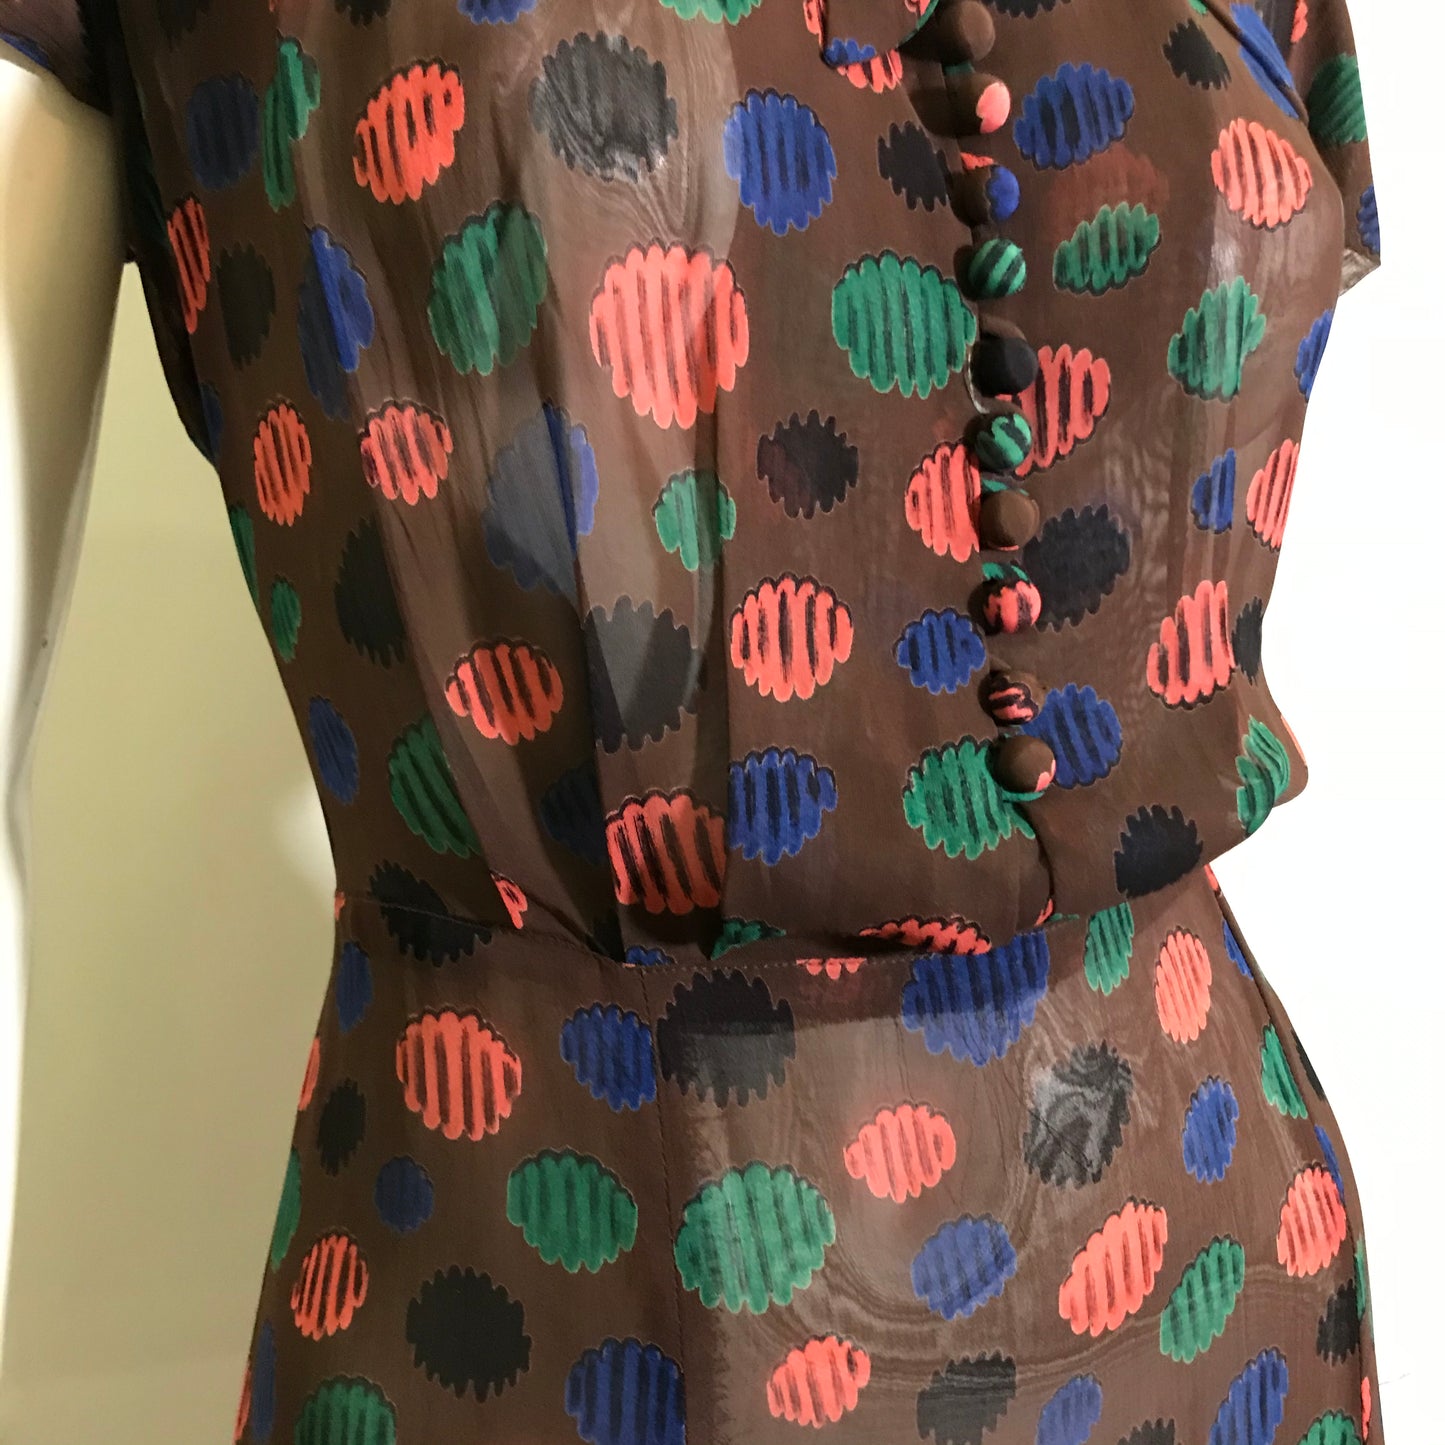 Semi-Sheer Cocoa Brown Rayon Dress and Overdress with Abstract Polka Dot Print circa 1940s